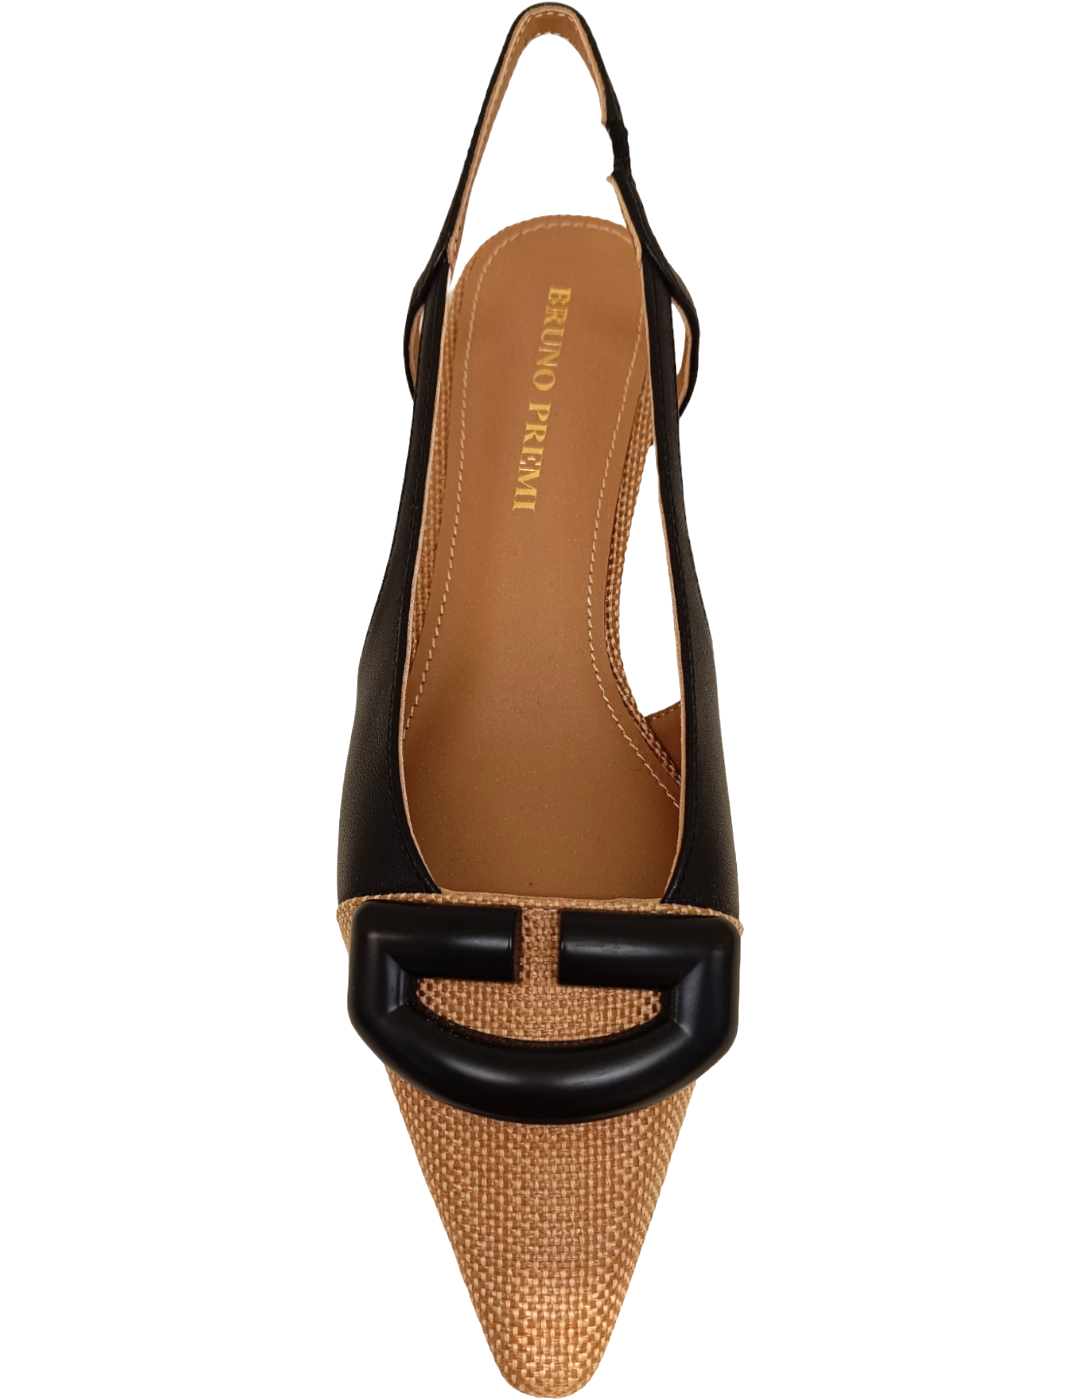 Zapato sling back bh0103 bruno negro